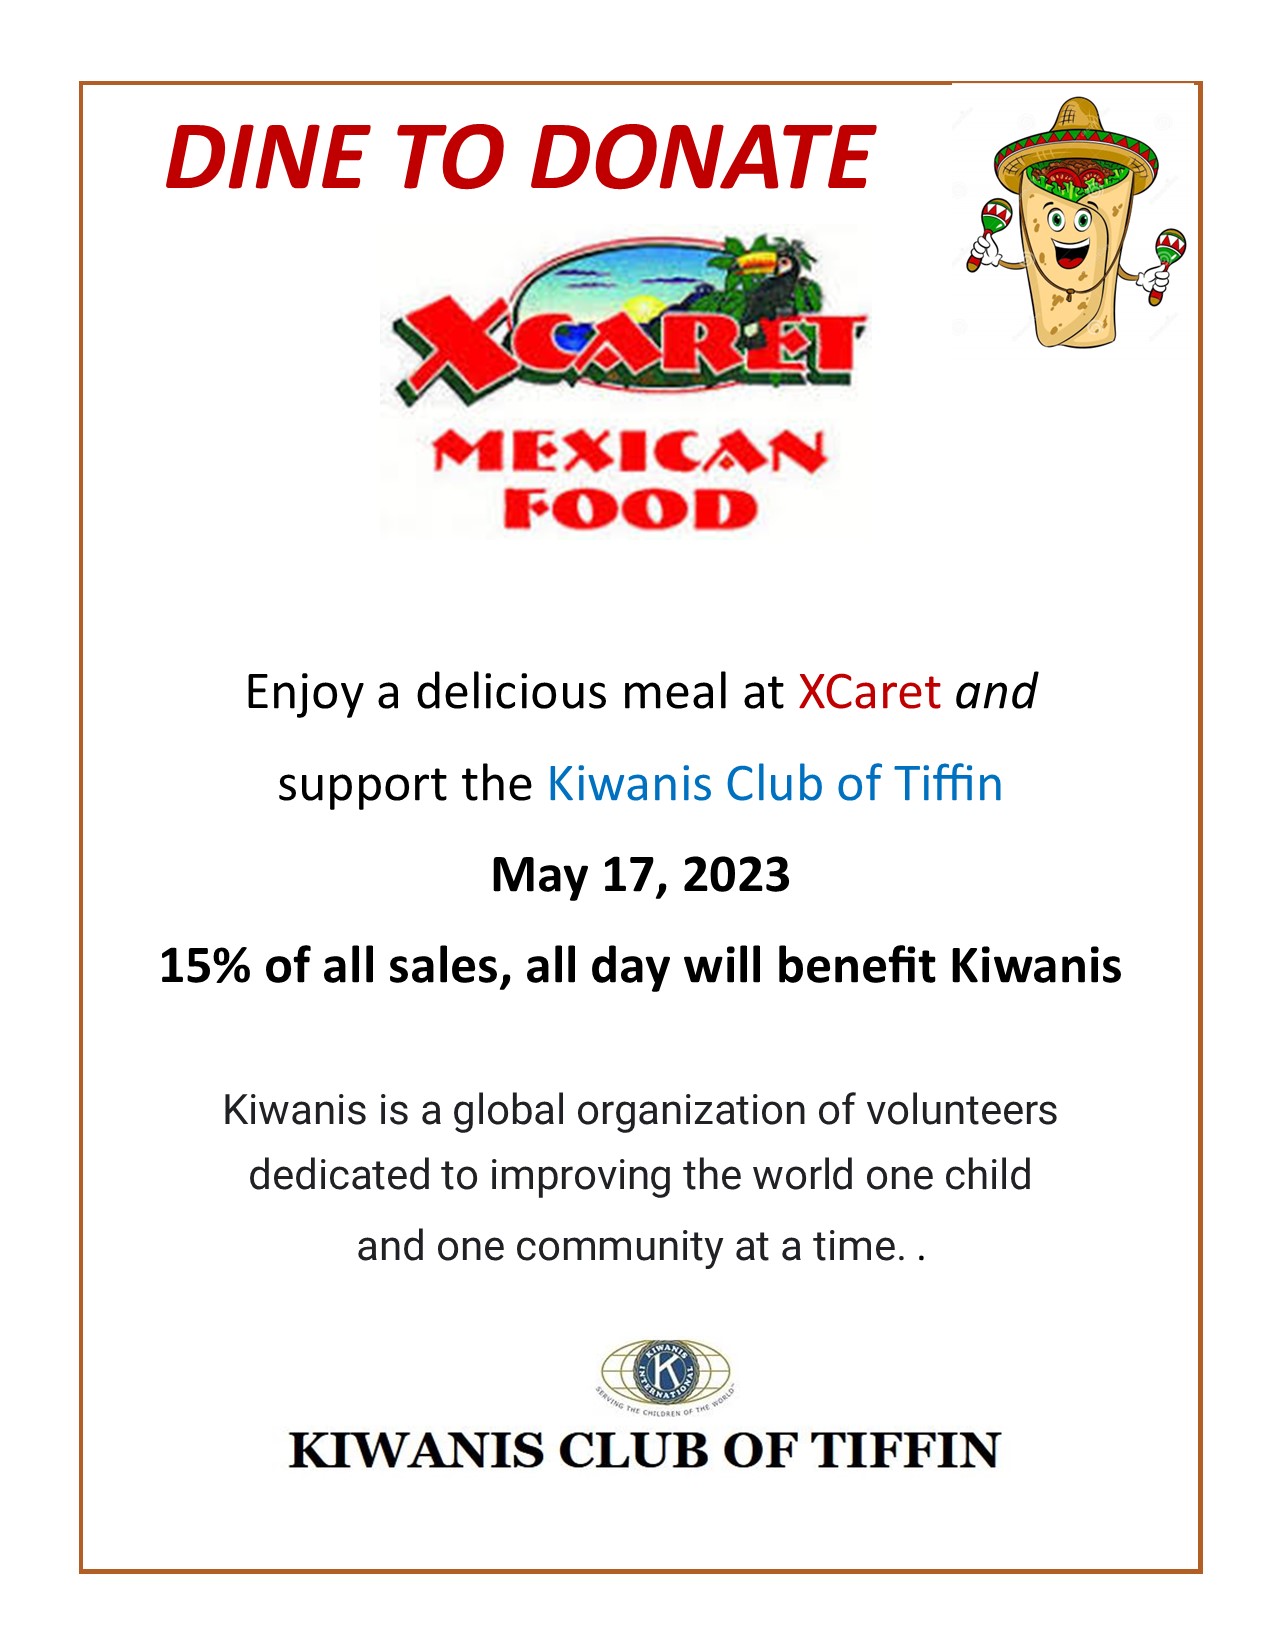 Kiwanis Club of Tiffin Dine to Donate